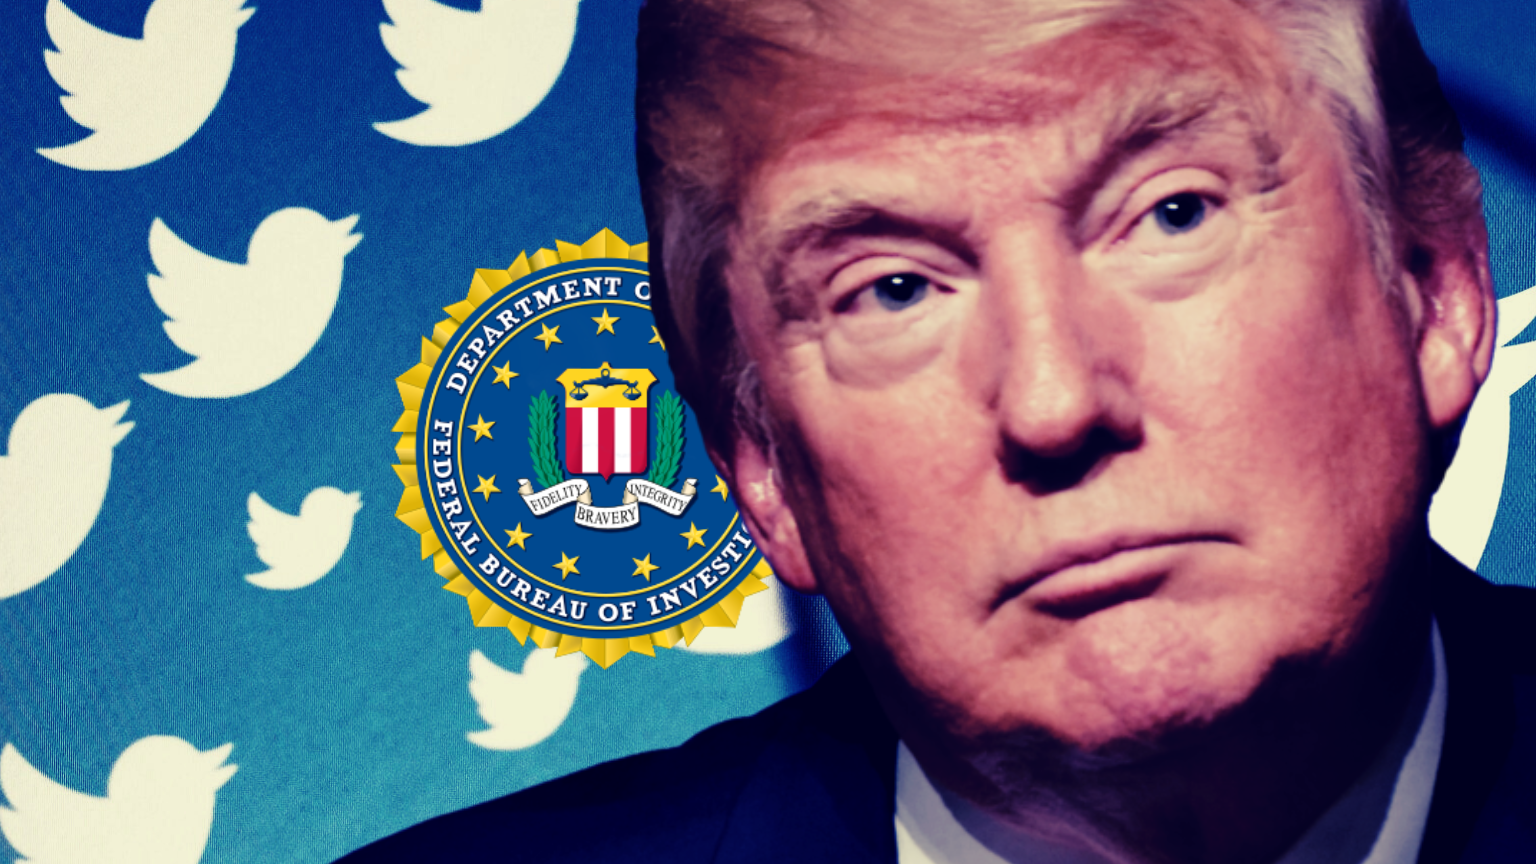 Trump criticizes FBI after Twitter censorship revelations